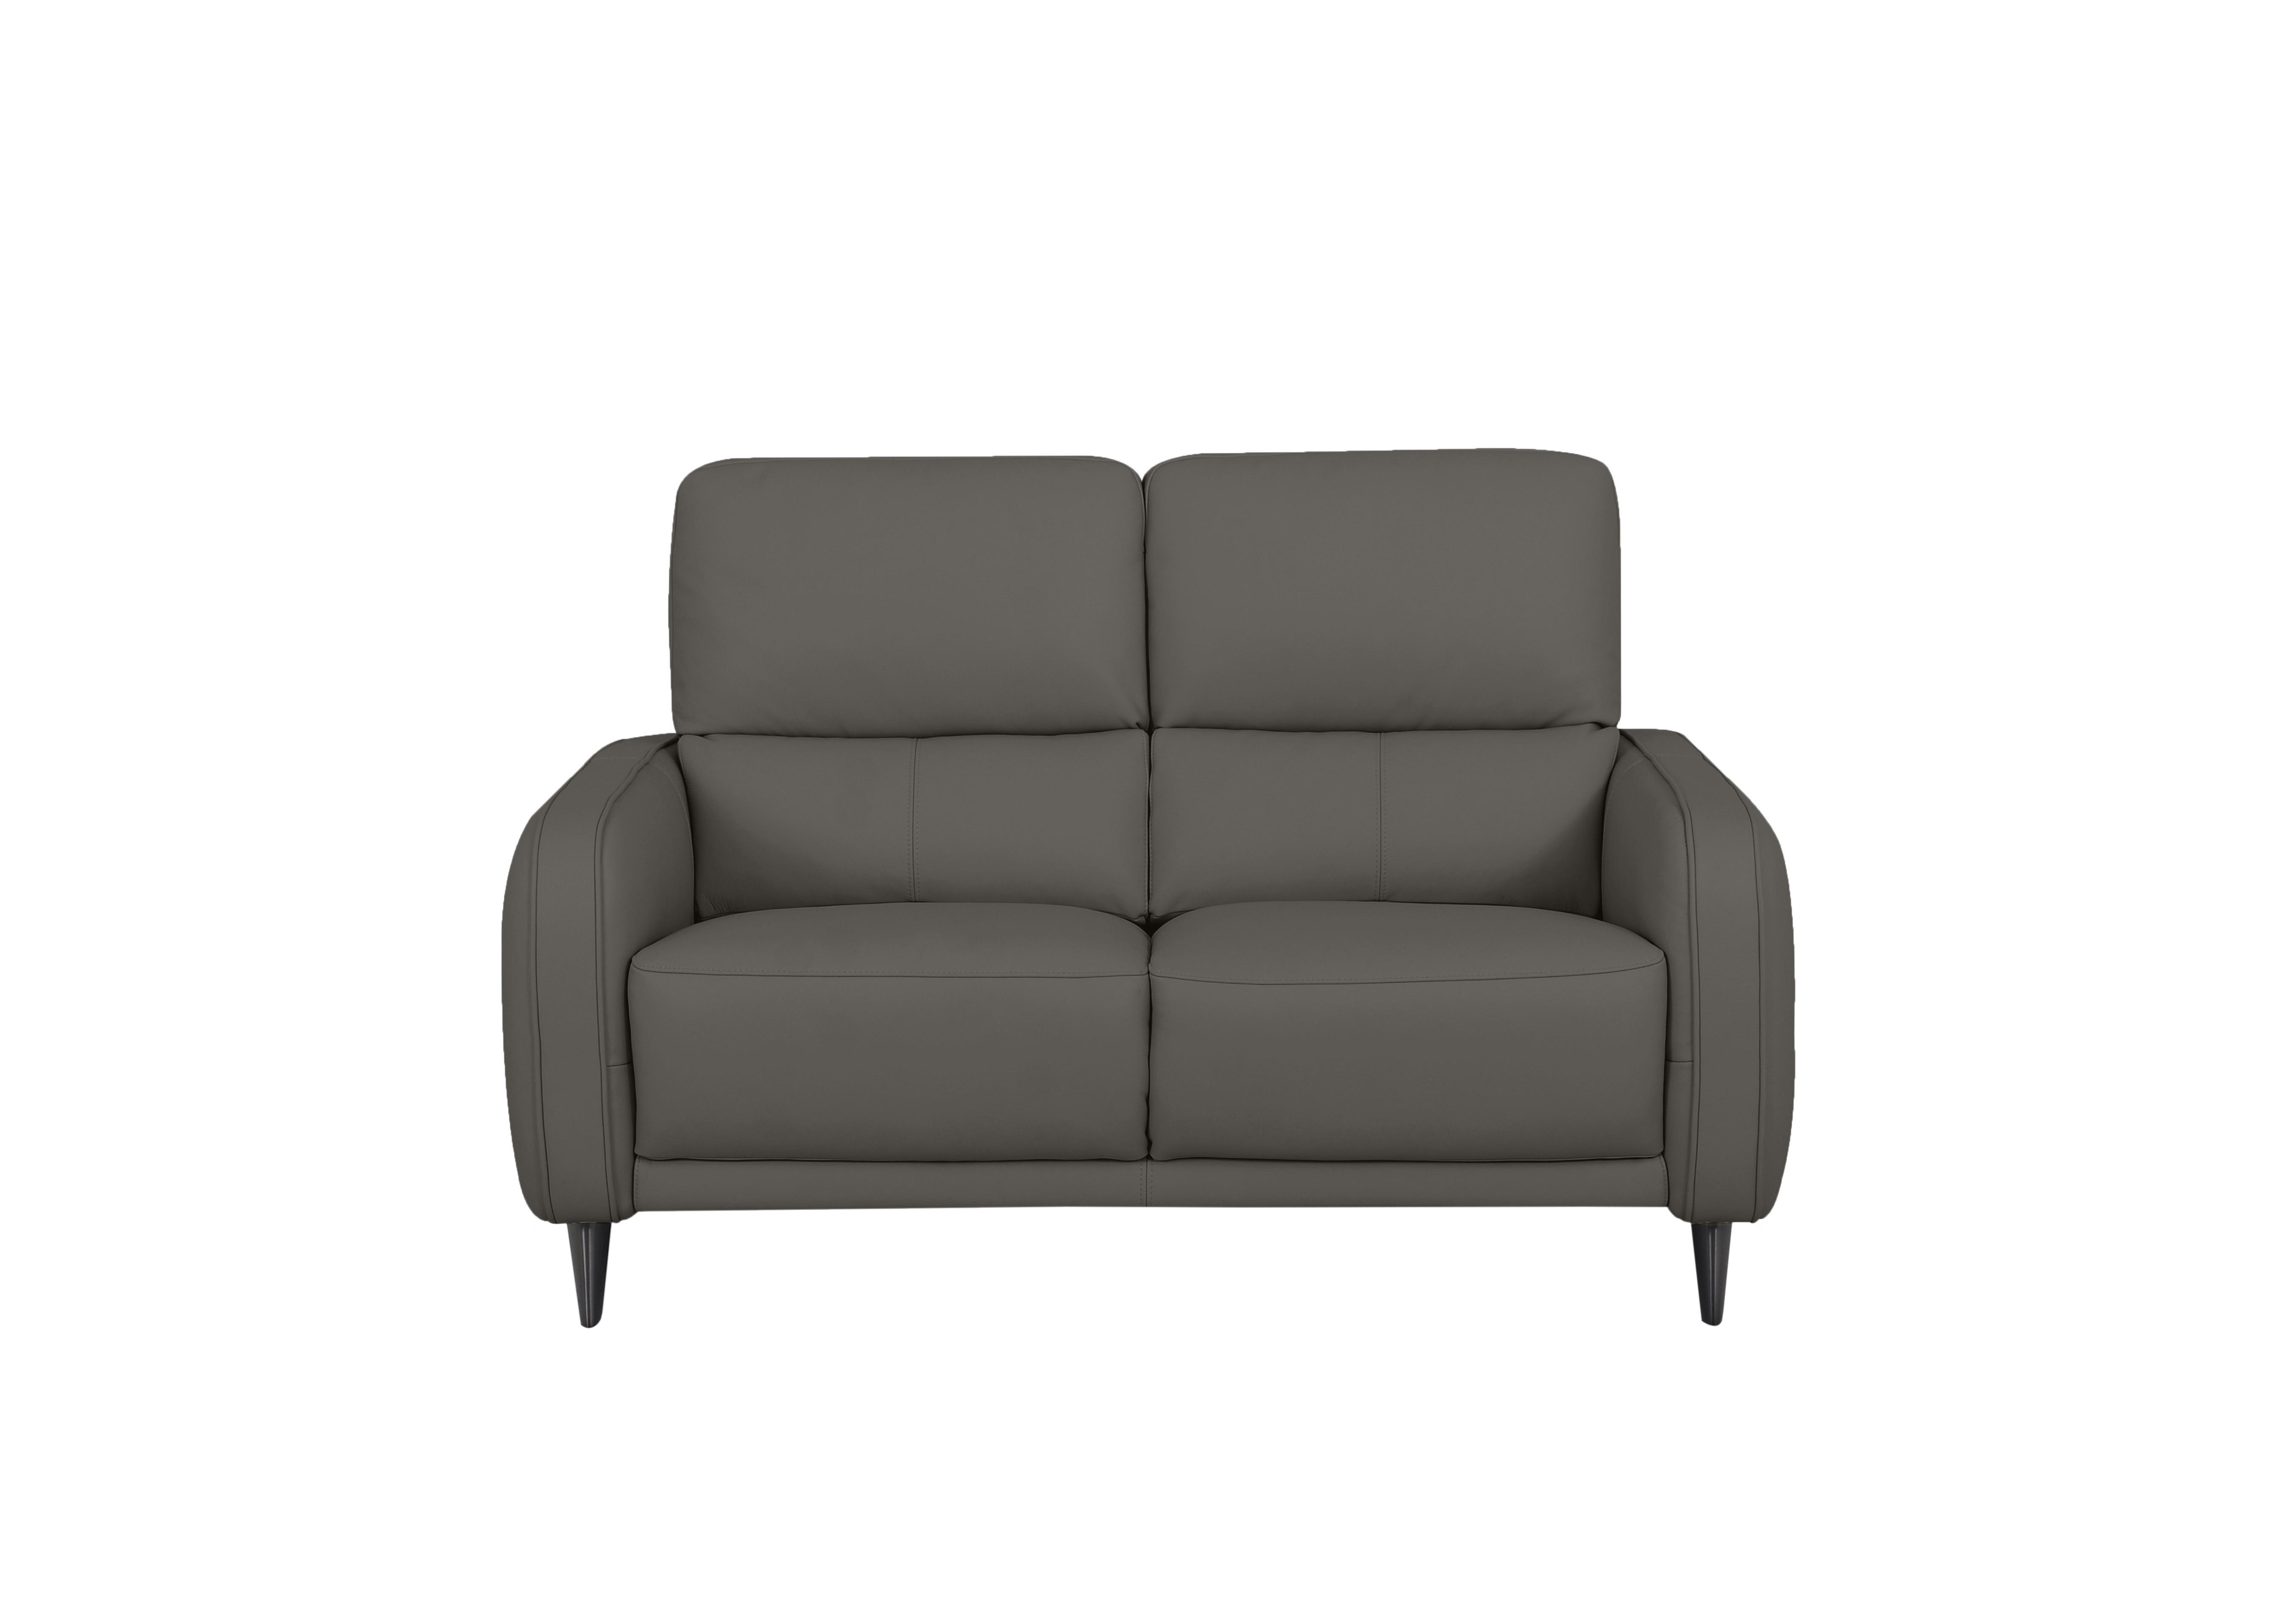 Logan 2 Seater Leather Sofa in Nn-515e Elephant Grey on Furniture Village